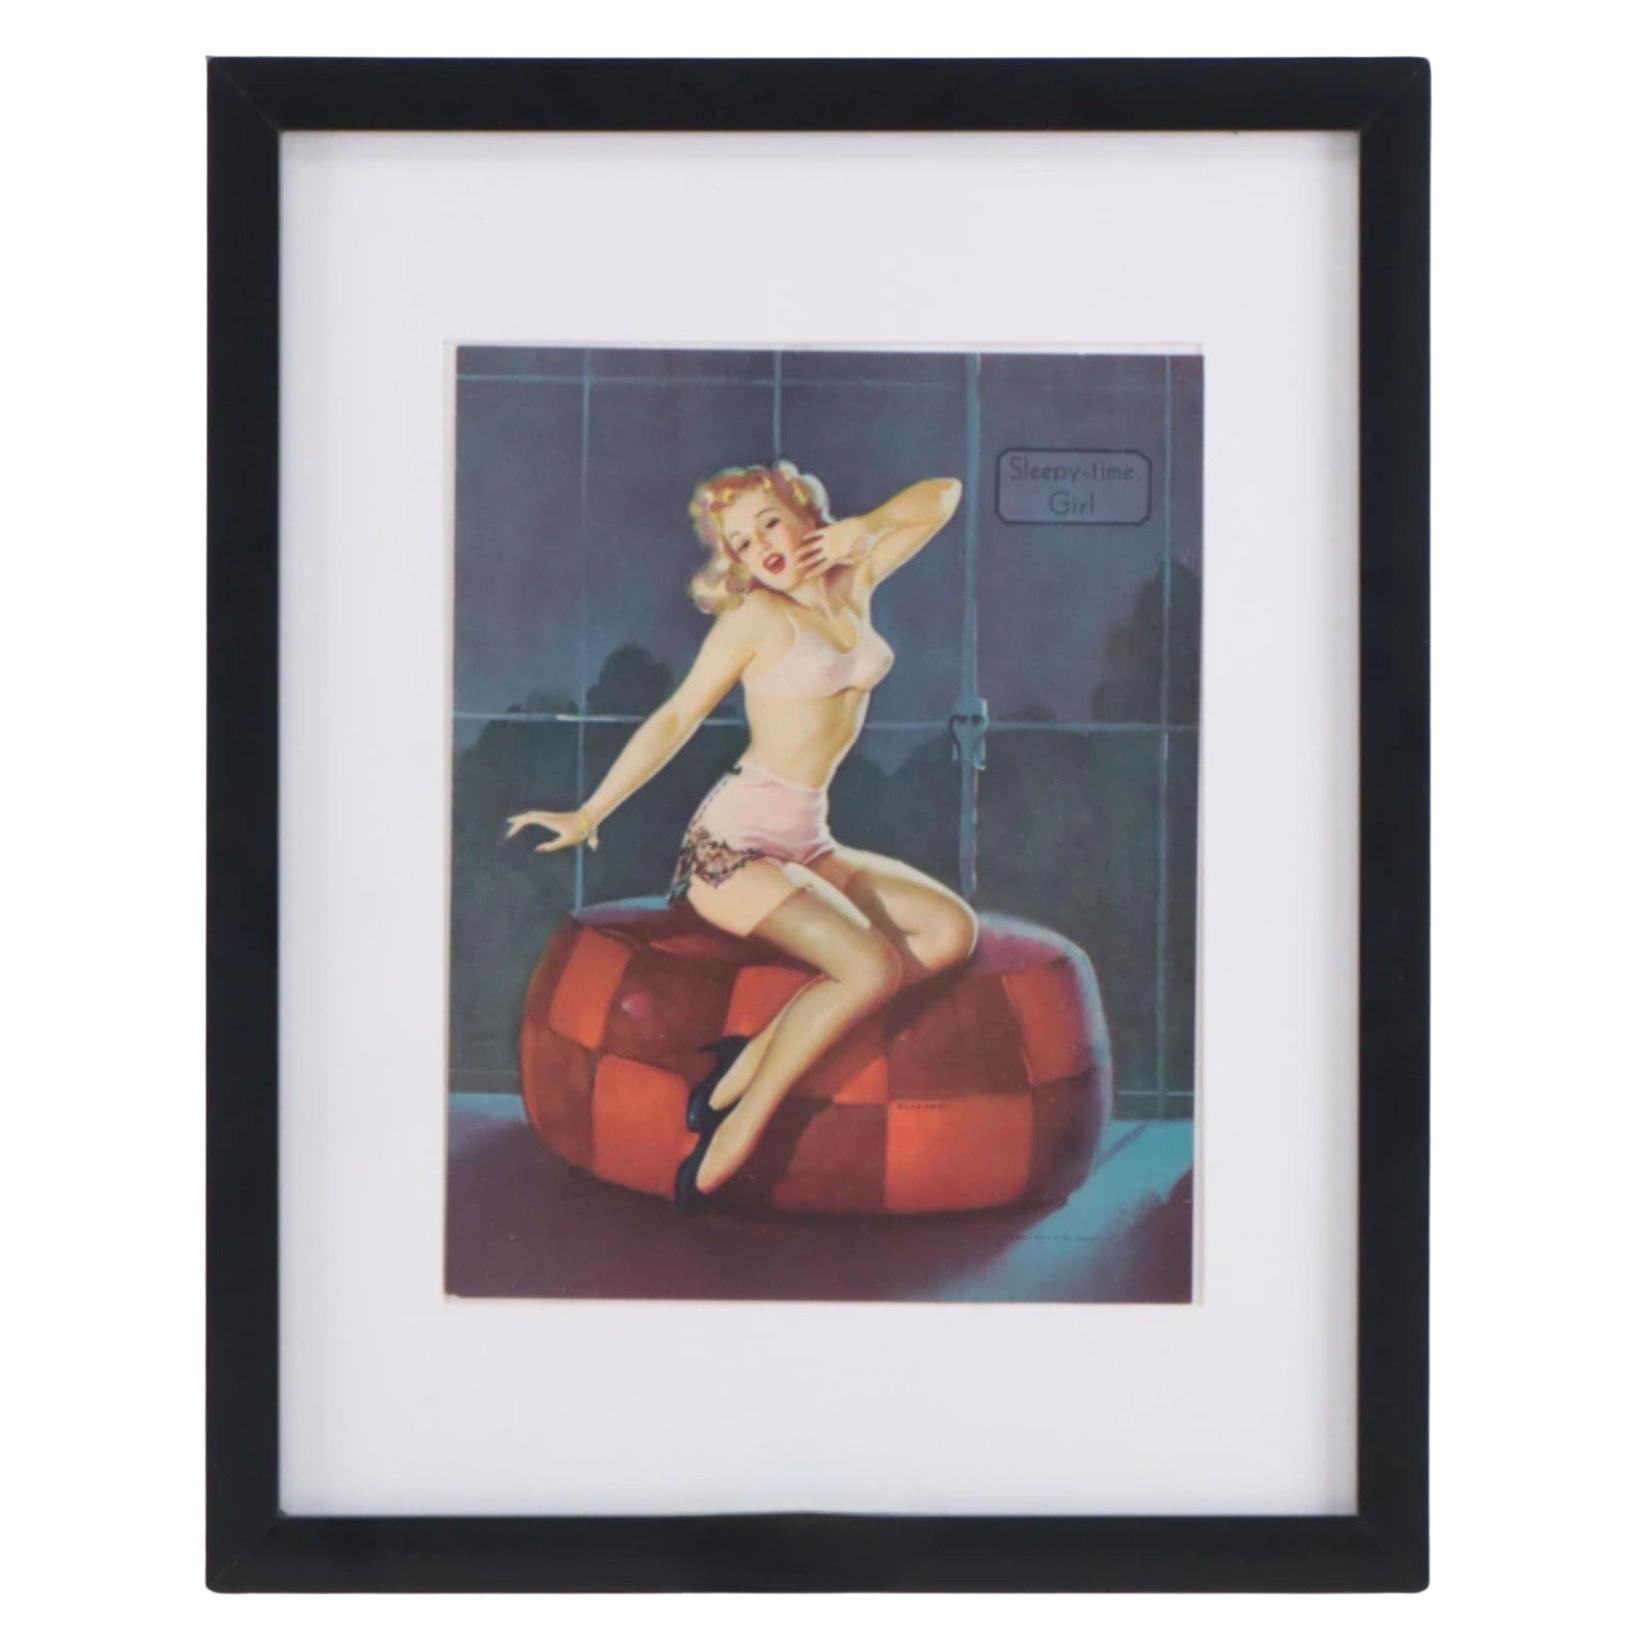 After Gil Elvgren (Am. 1914-1980) Framed Offset Lithograph “Sleepy Time Girl”  For Sale